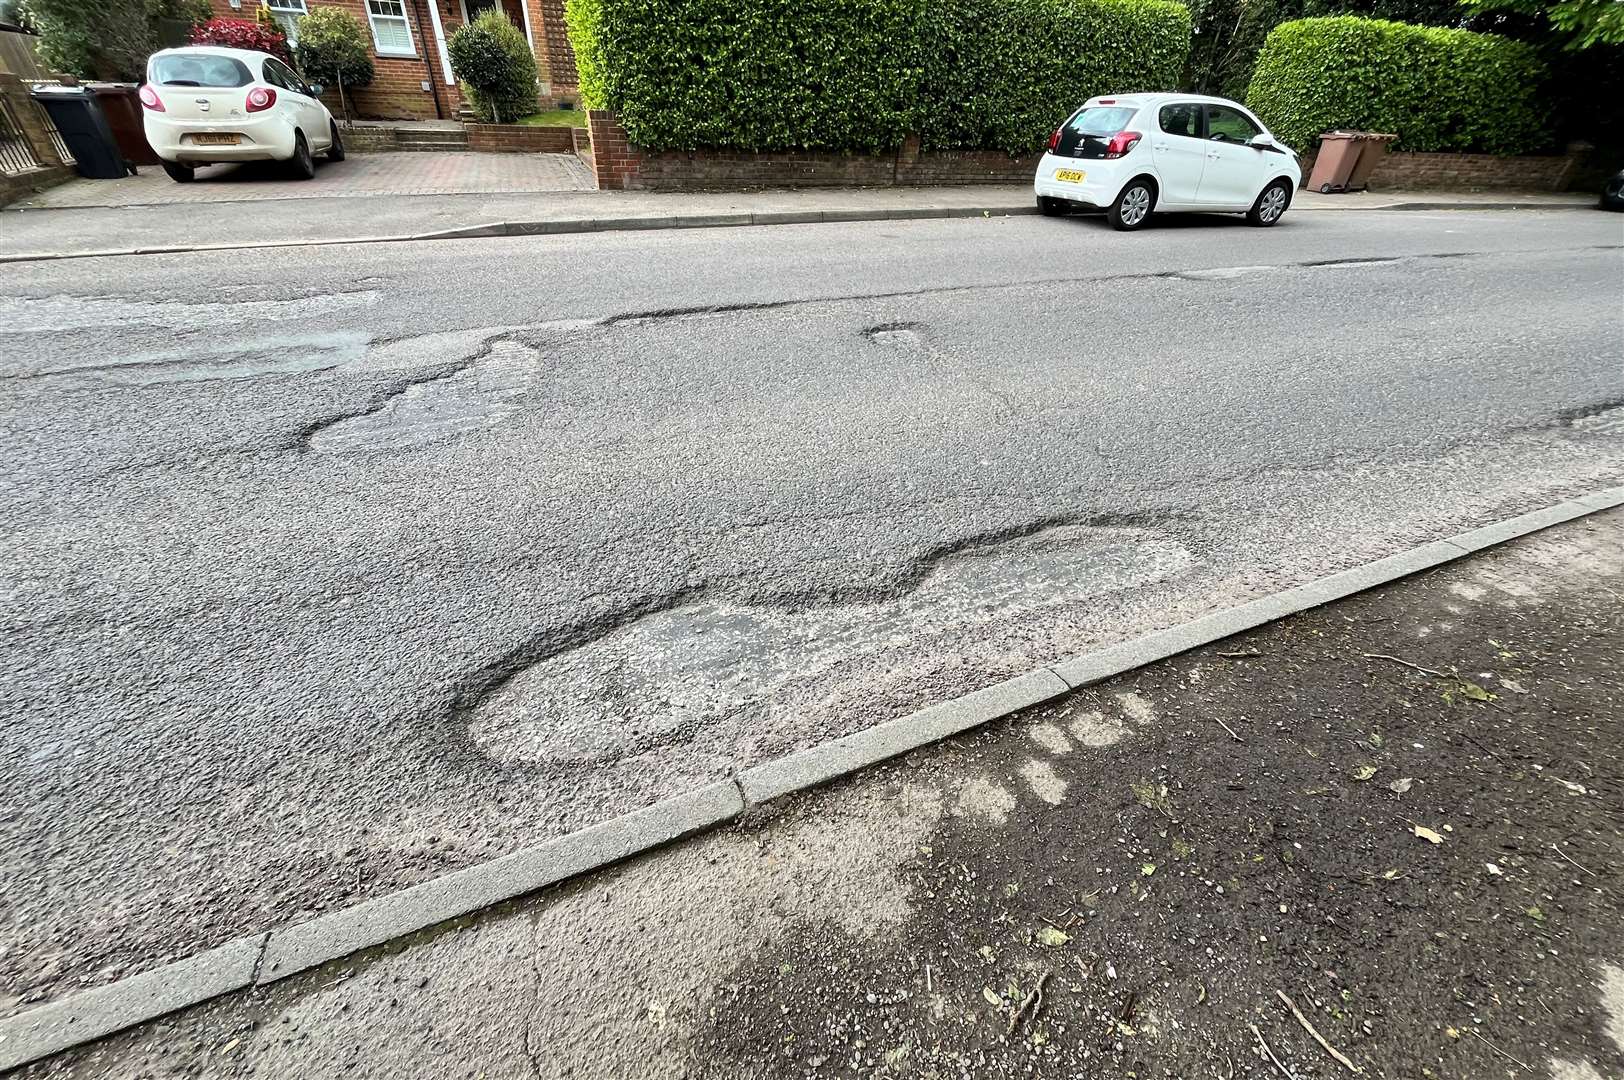 Just some of the potholes in Beacon Oak Road, Tenterden